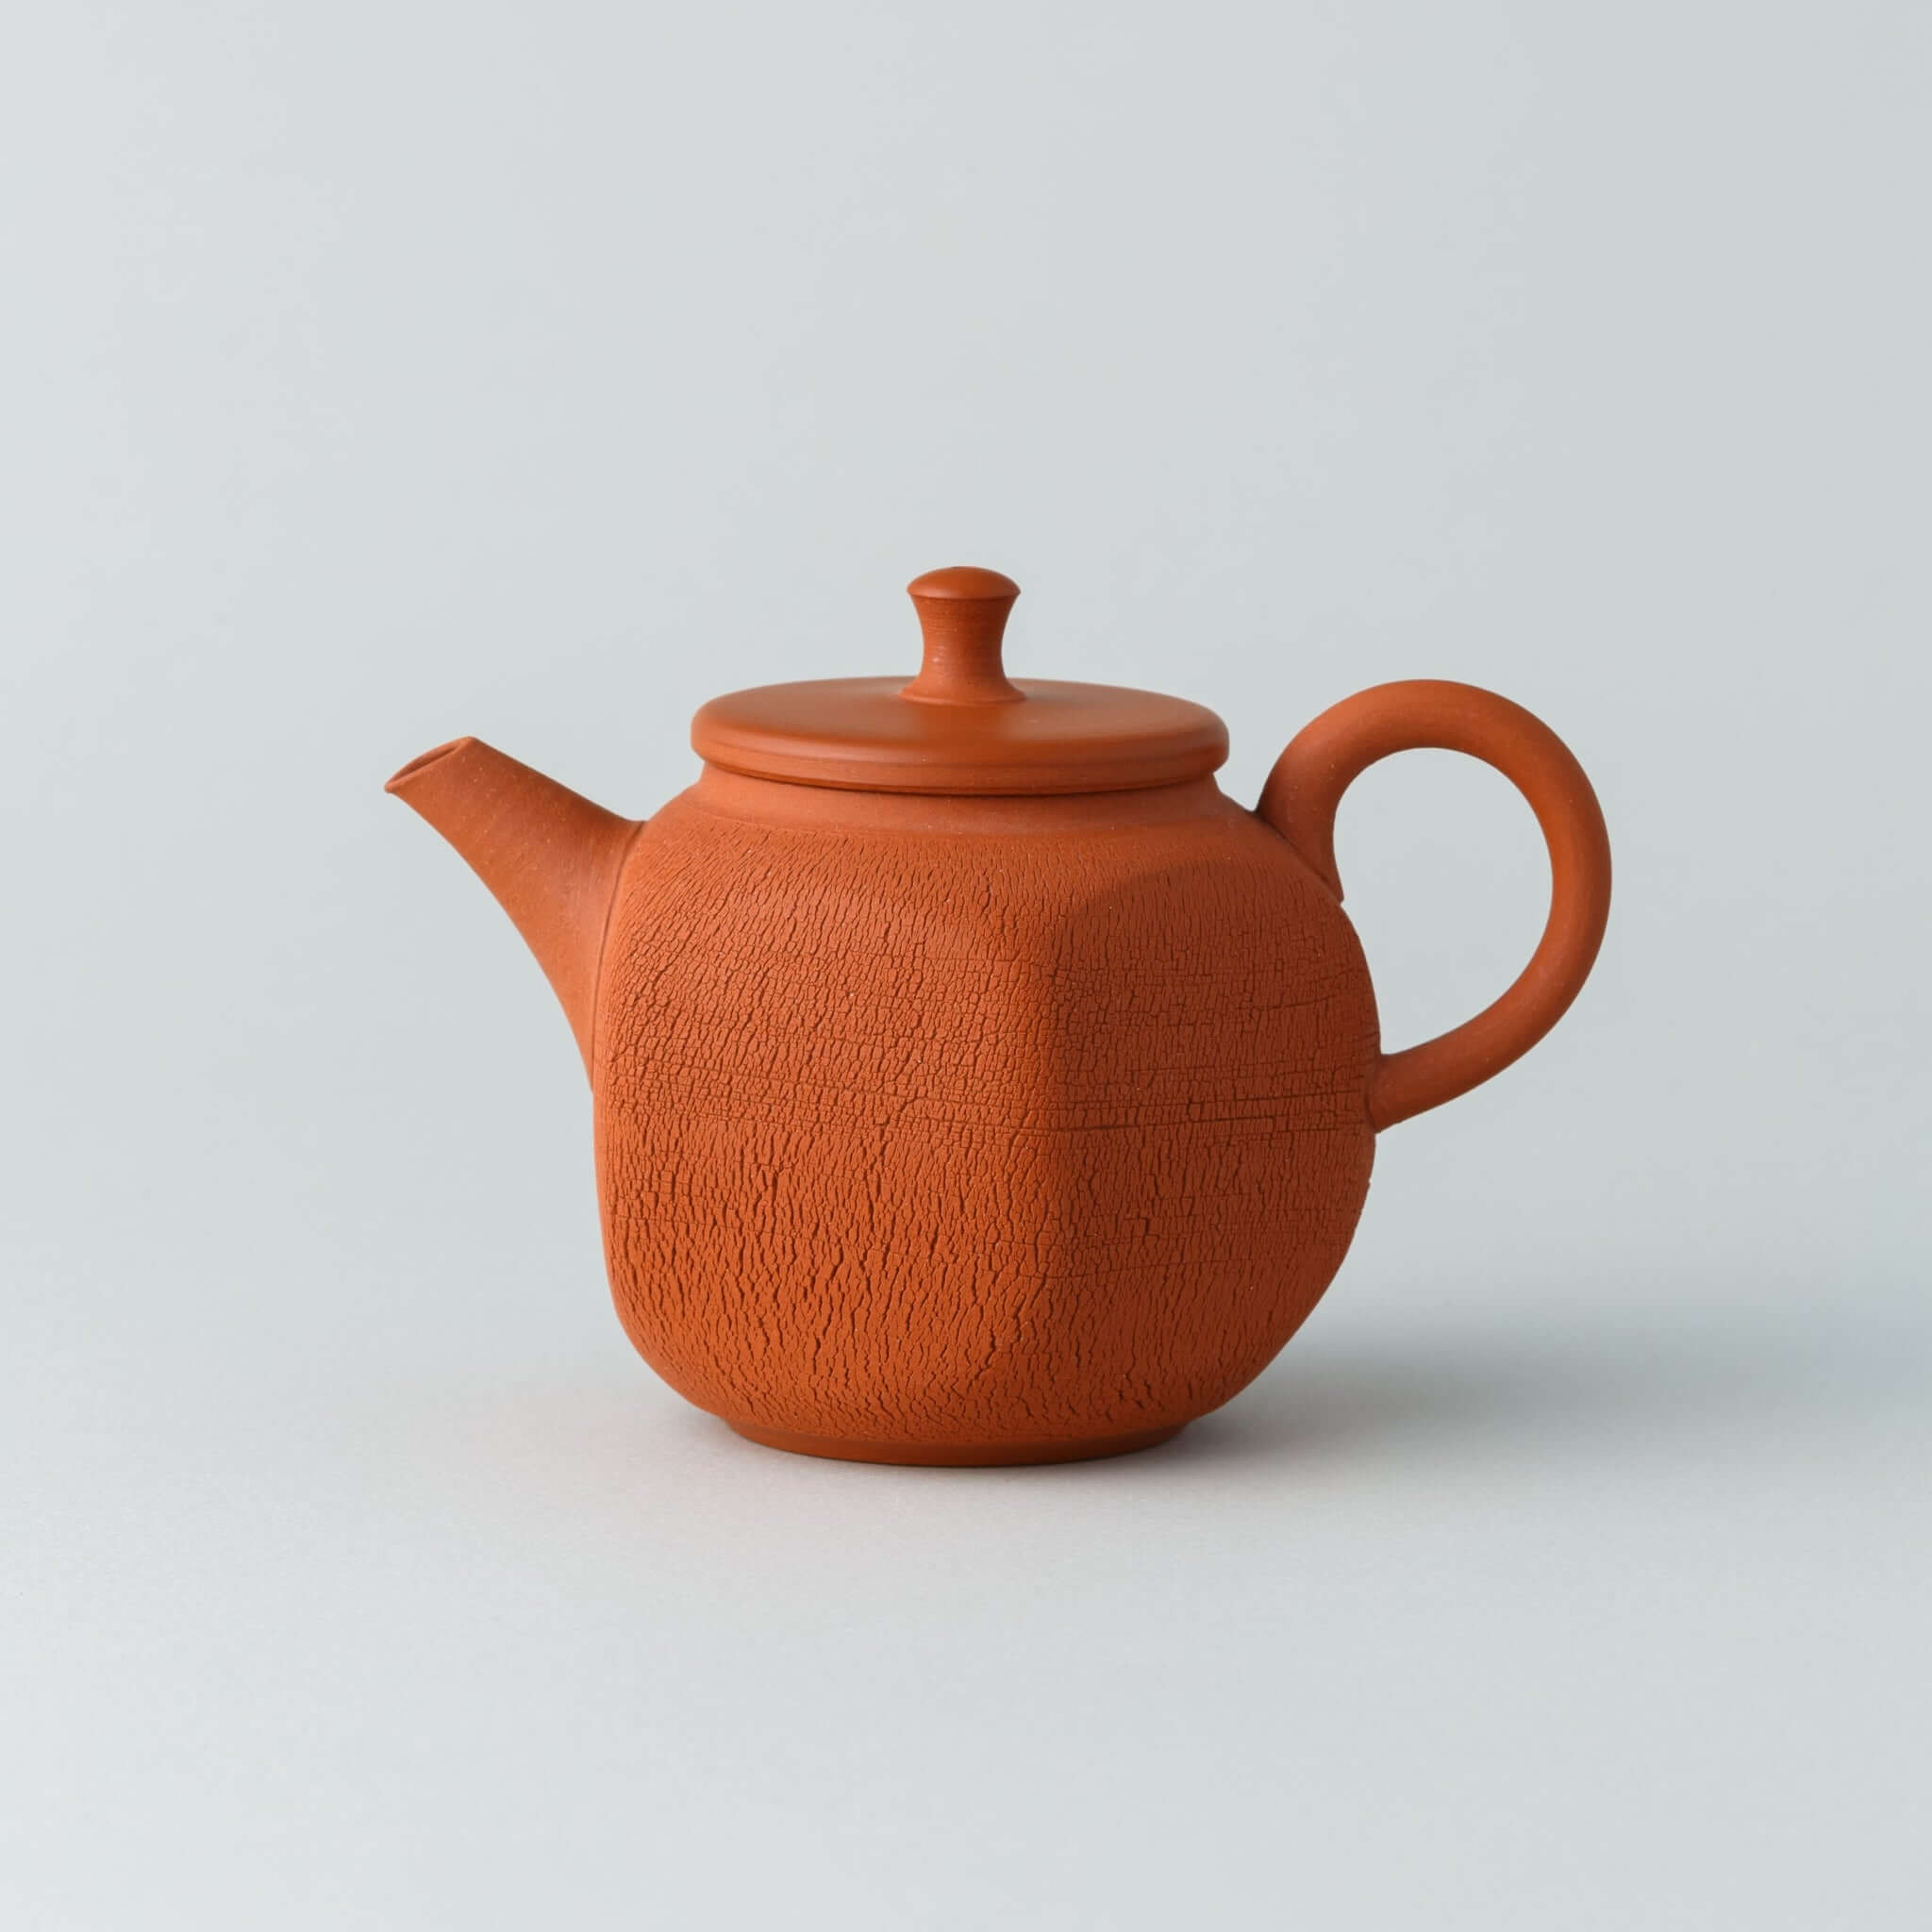 朱嵐絞り茶壺 (中国茶・台湾茶向け急須) – 煎茶 中国茶 台湾茶向け 